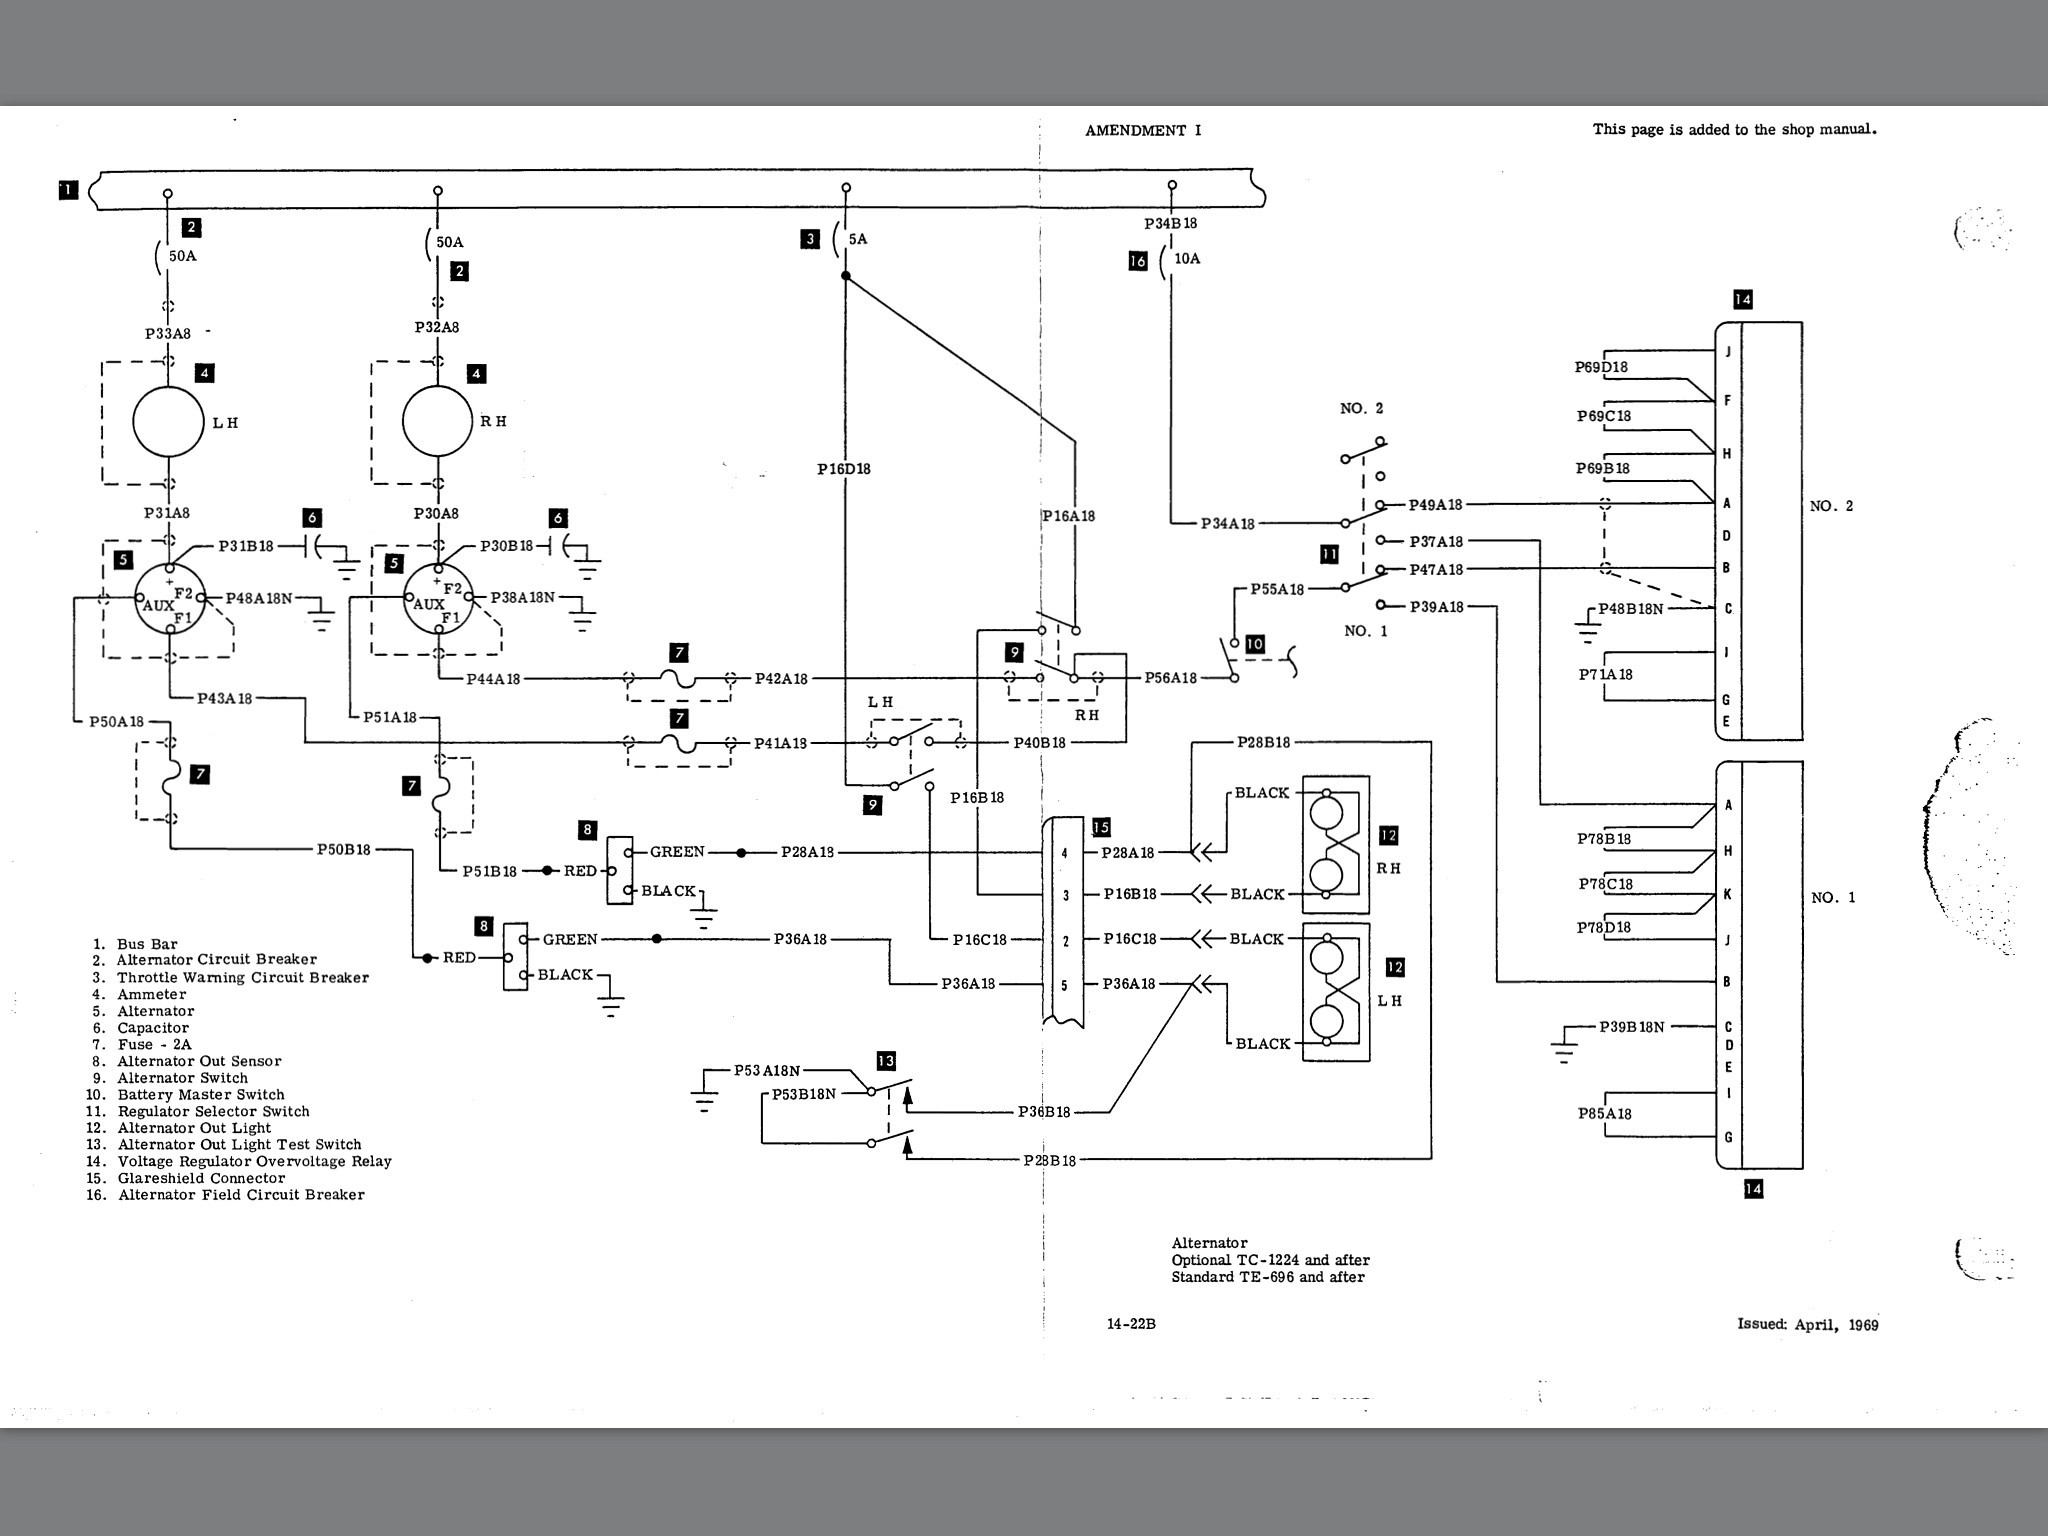 Wiring Diagram Alternator Voltage Regulator Fresh 4 Wire Alternator Wiring Diagram Auto Throughout Voltage Regulator Inspirationa